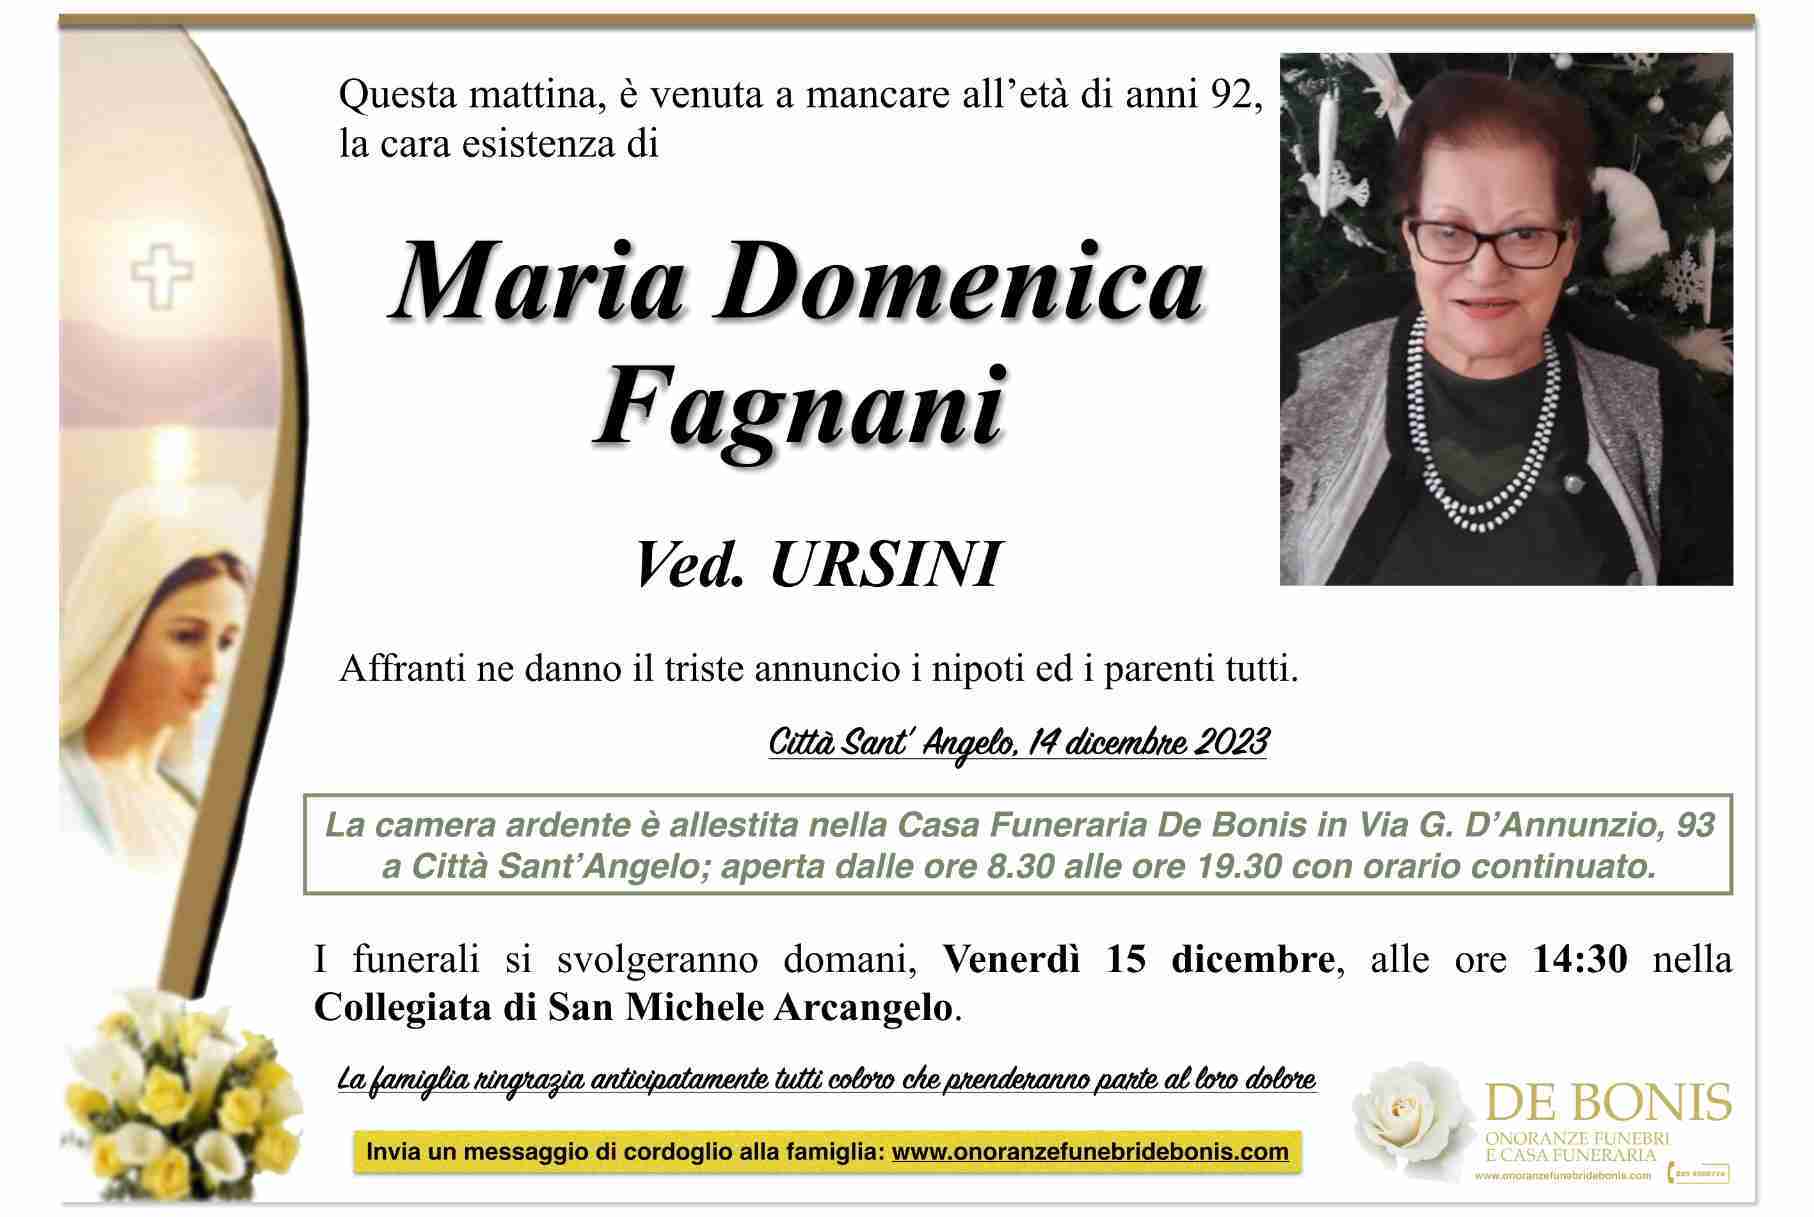 Maria Domenica Fagnani